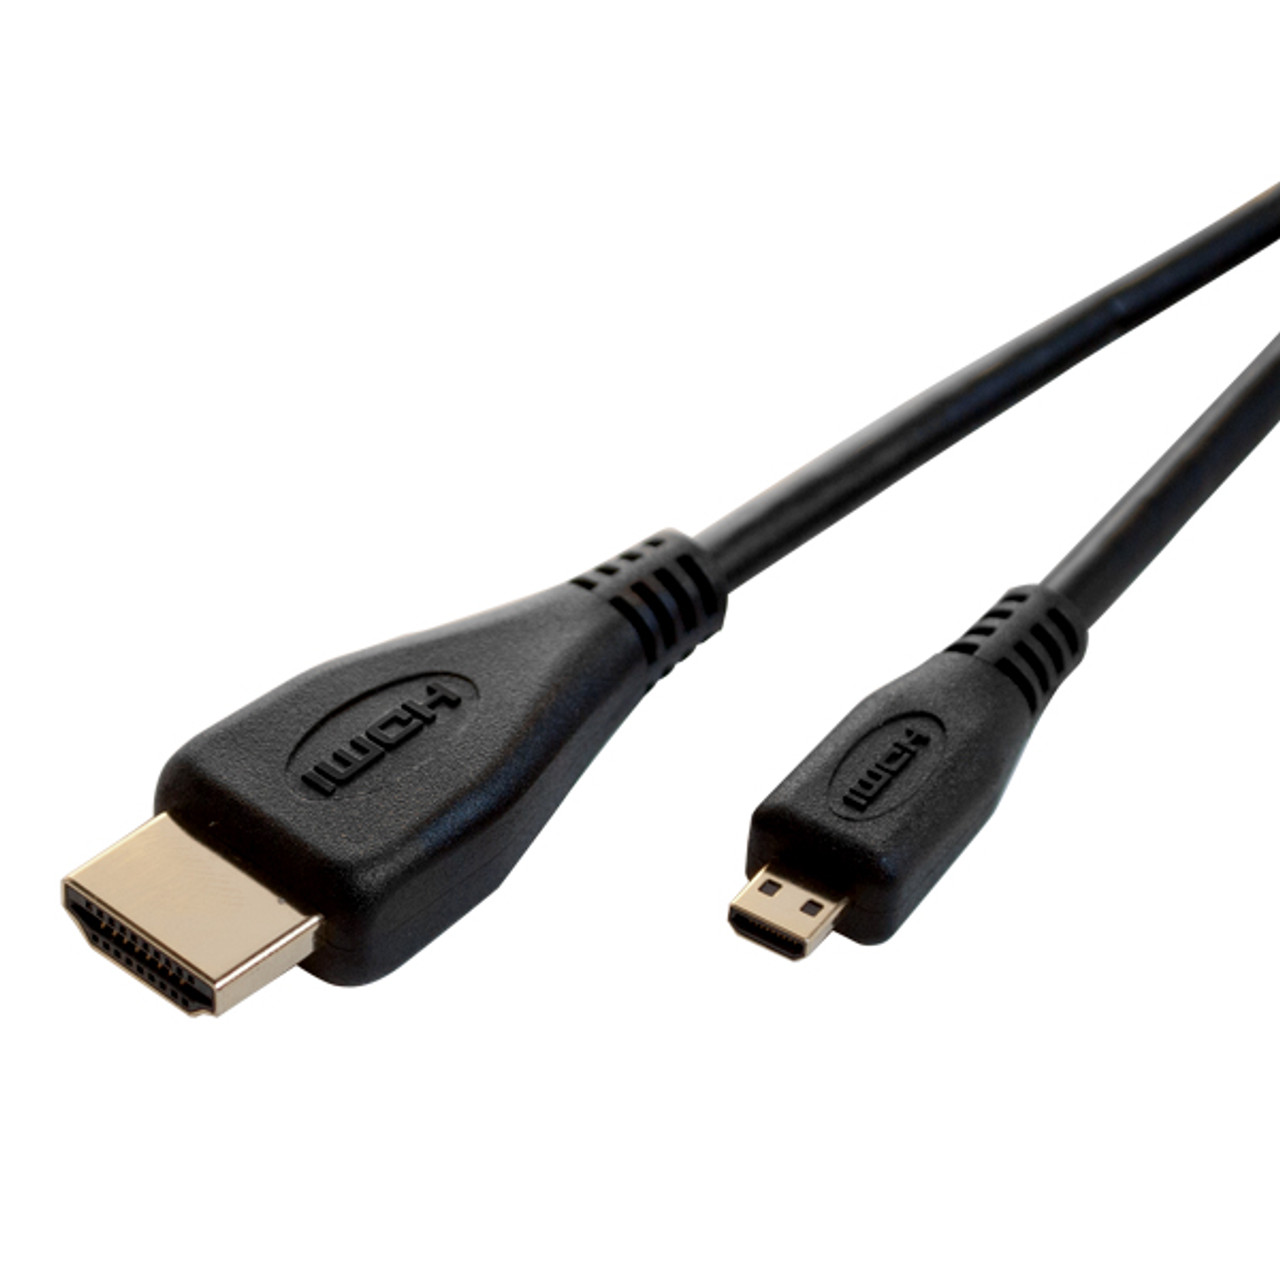 Микро d. Type d кабель. Type-d HDMI разъем. ++D Cable Type. G900fxxs1cqd11&11c82c58 HDMI.